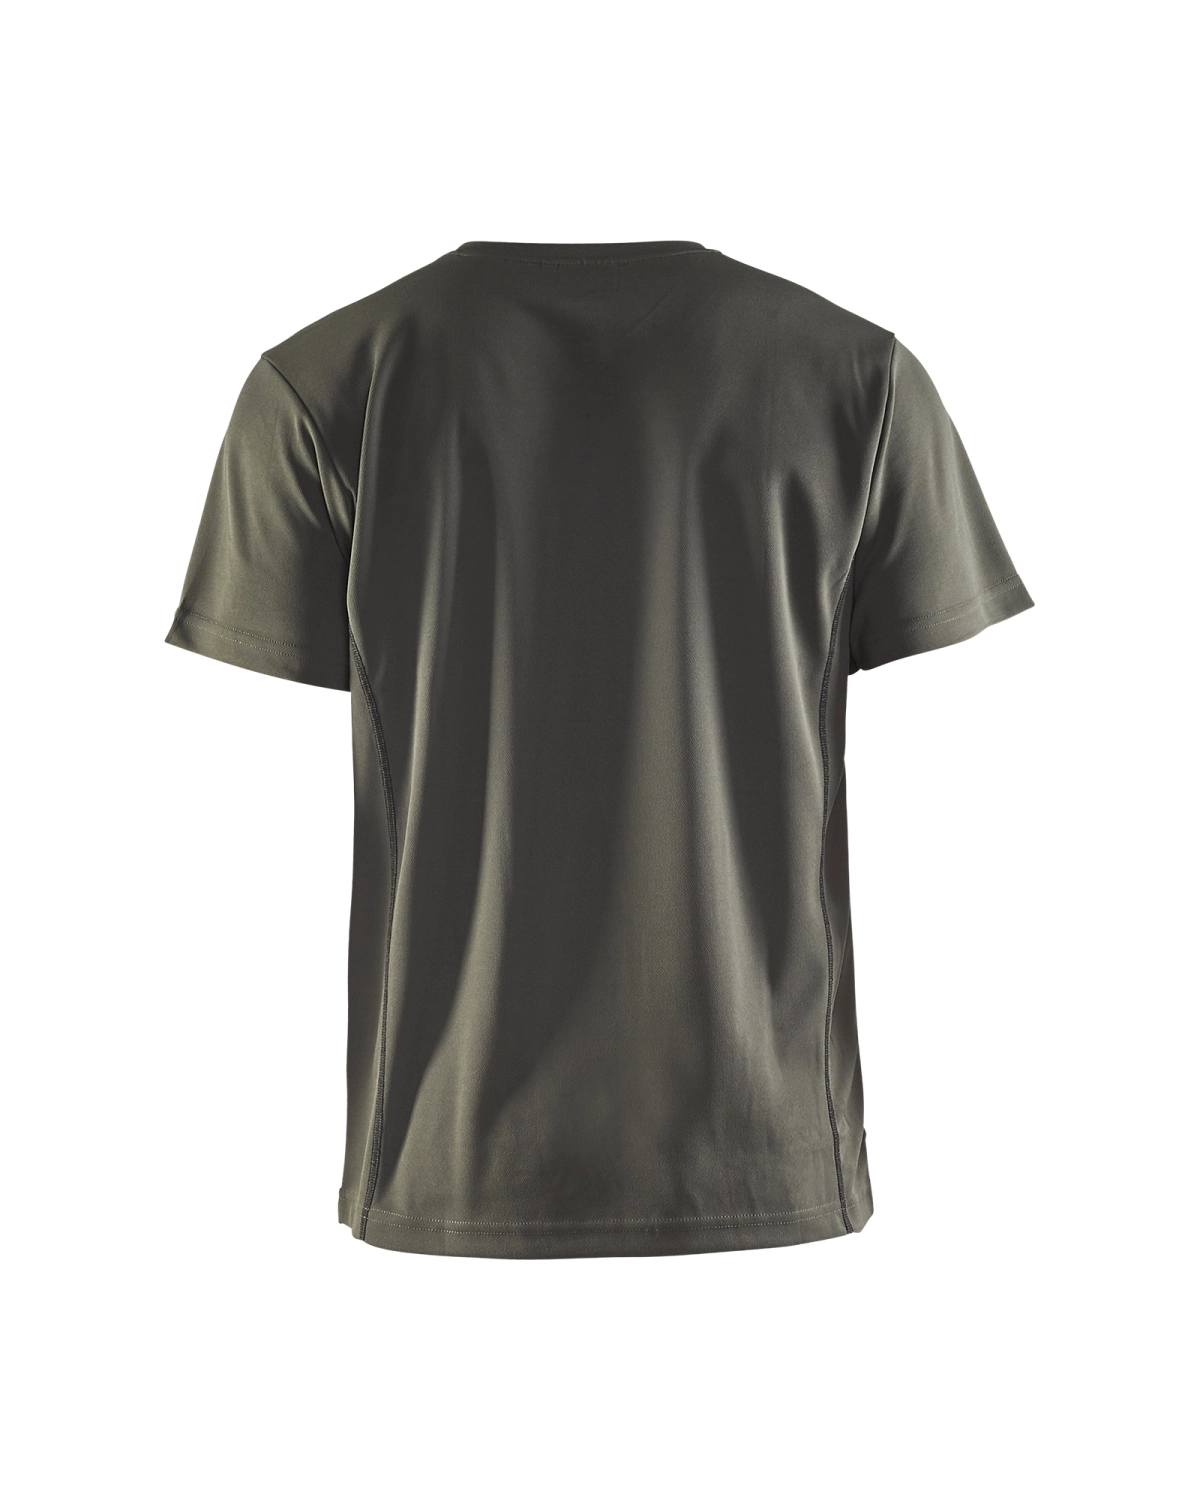 Blåkläder 3323 UV t-shirt - army groen - L-image